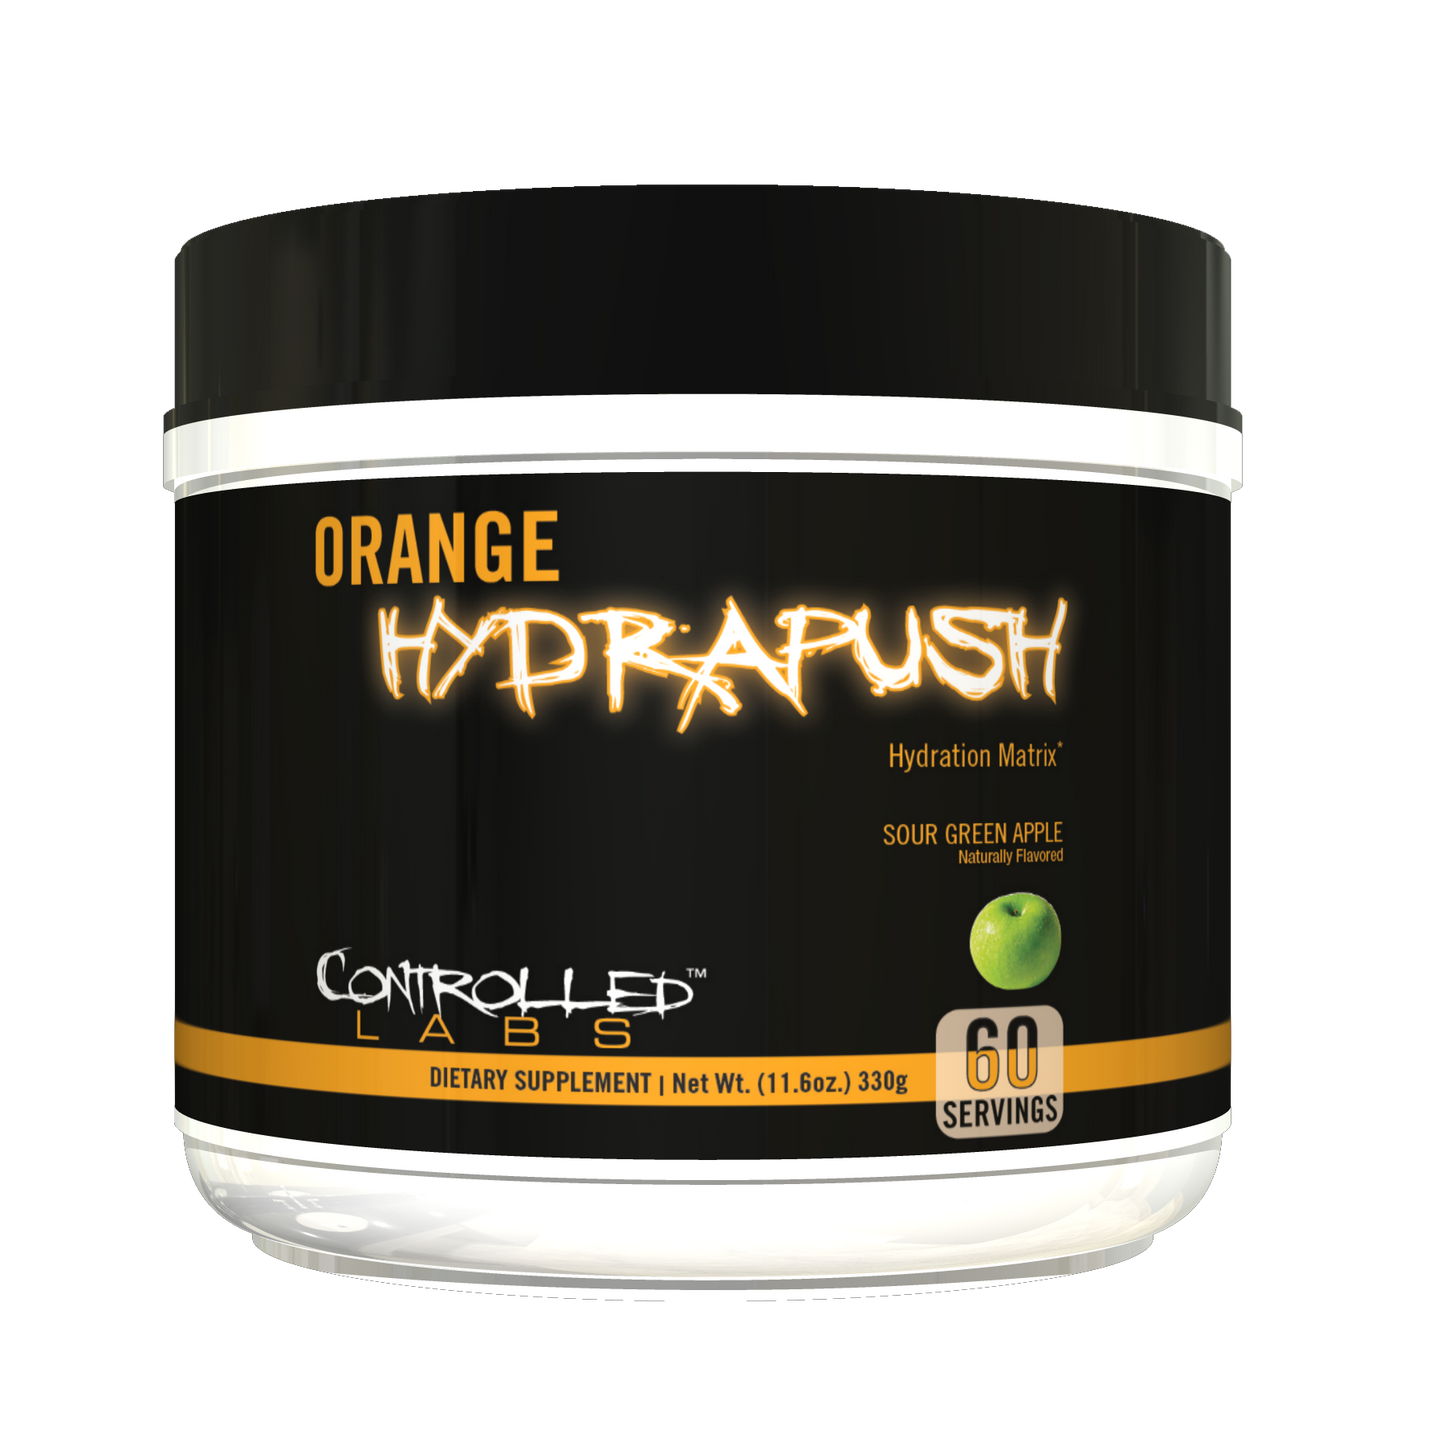 Orange HydraPush Electrolyte Powder